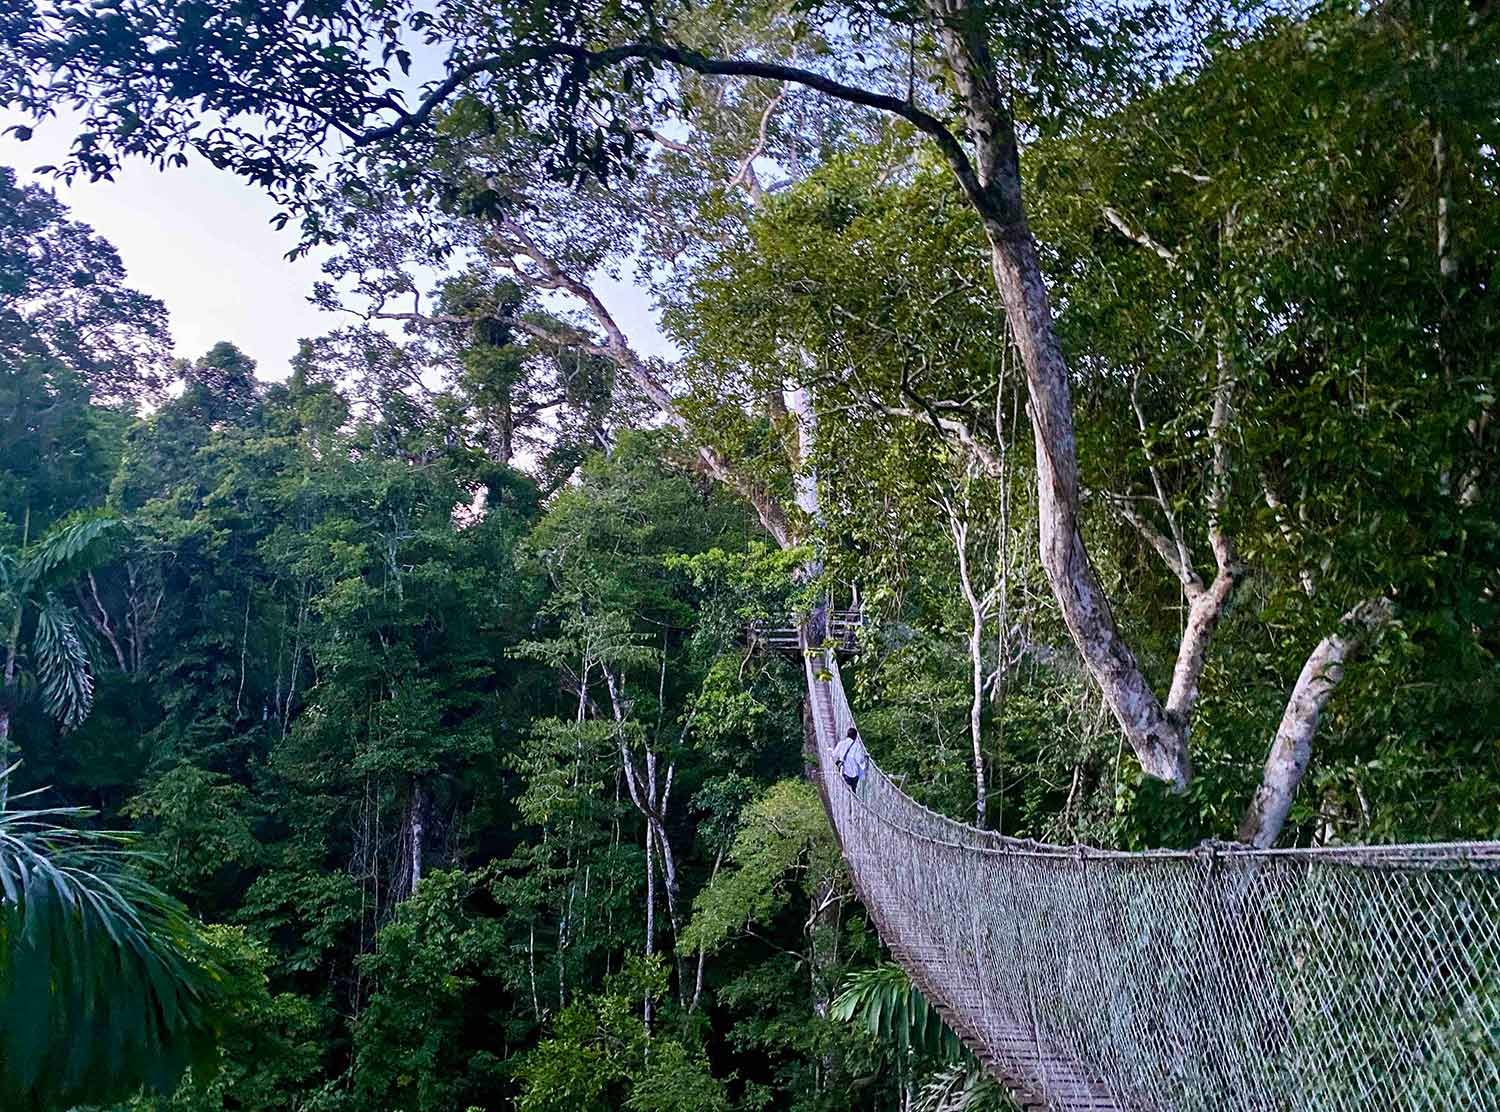 Inkaterra Reserva Amazonica Walk through 45 meter high treetops along suspension bridges that link eight observation platforms